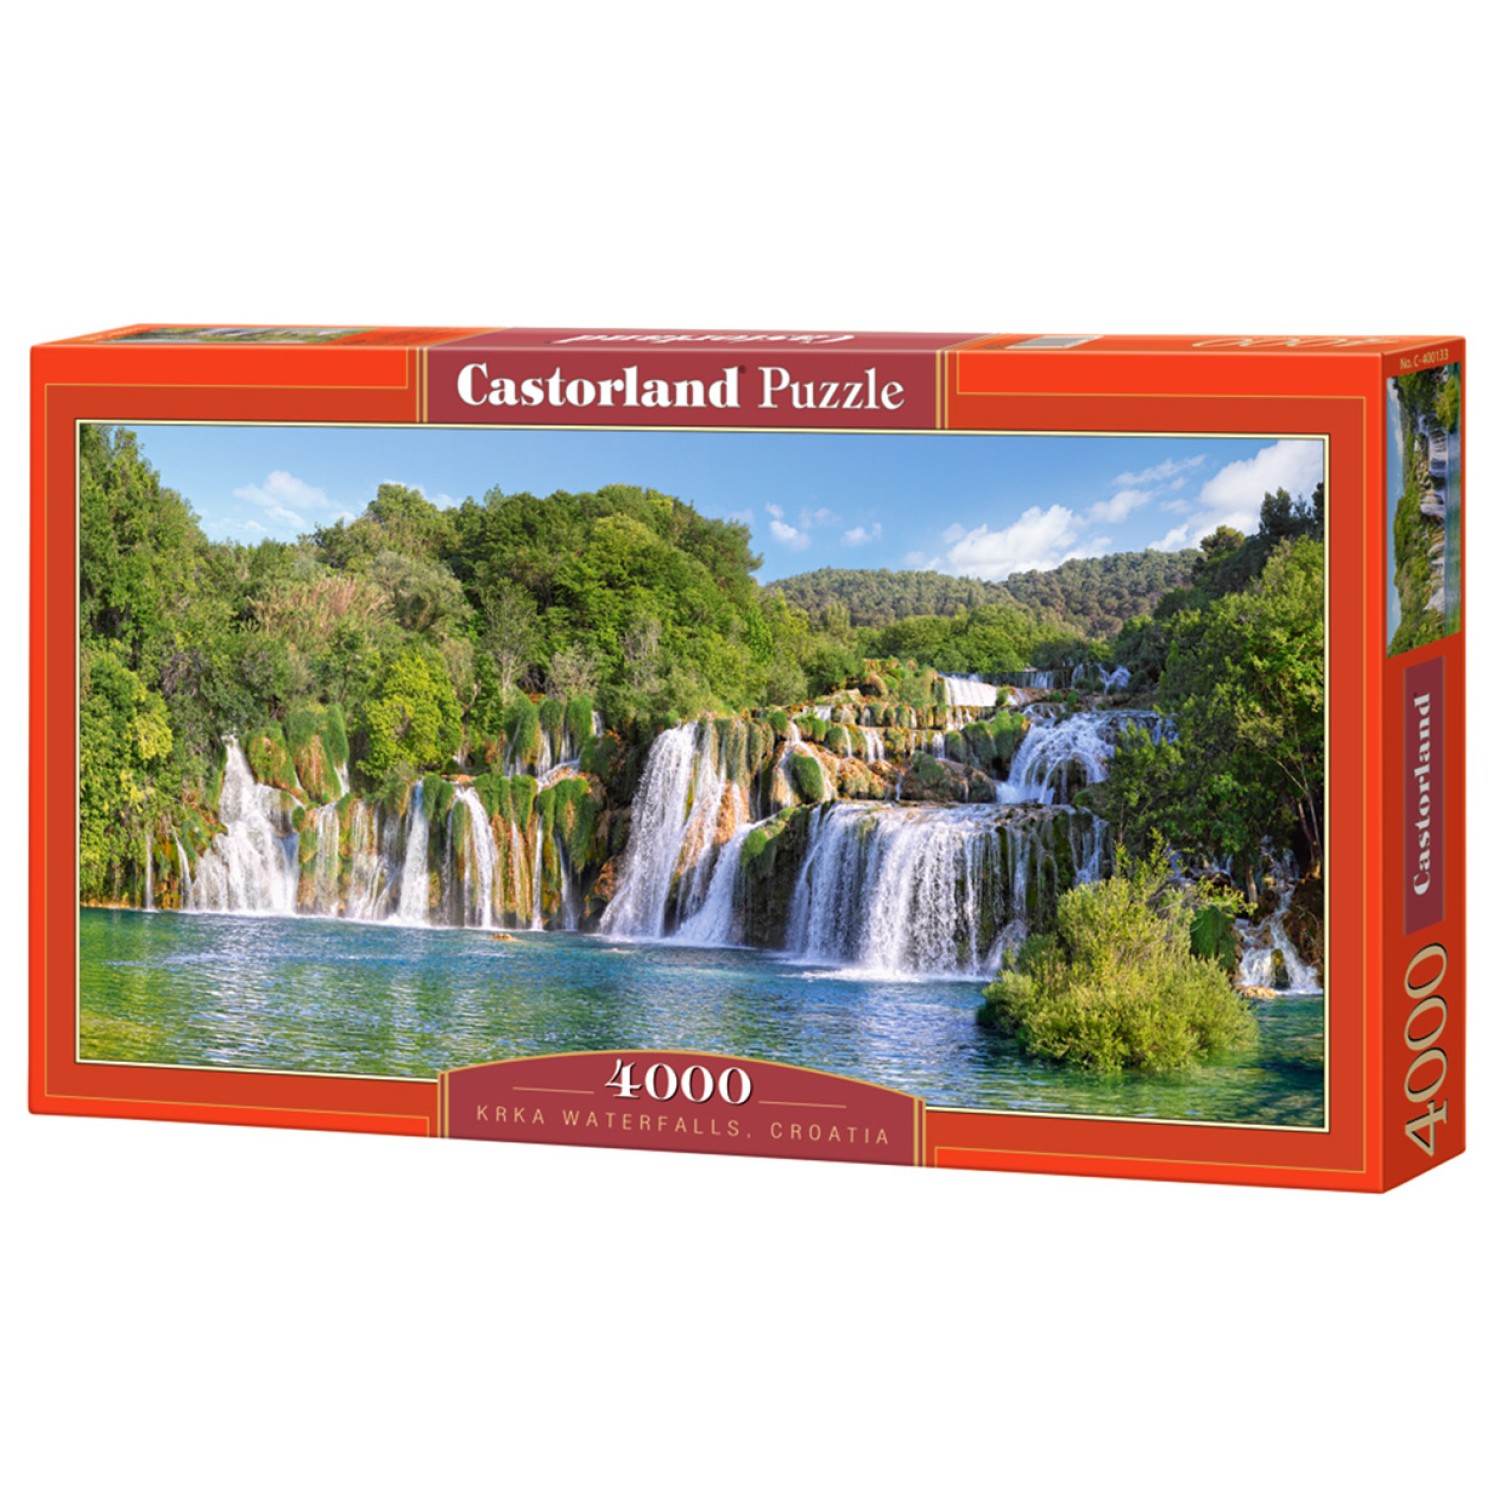 Castorland 400133 Krka Waterfalls, Croatia 4000 pieces